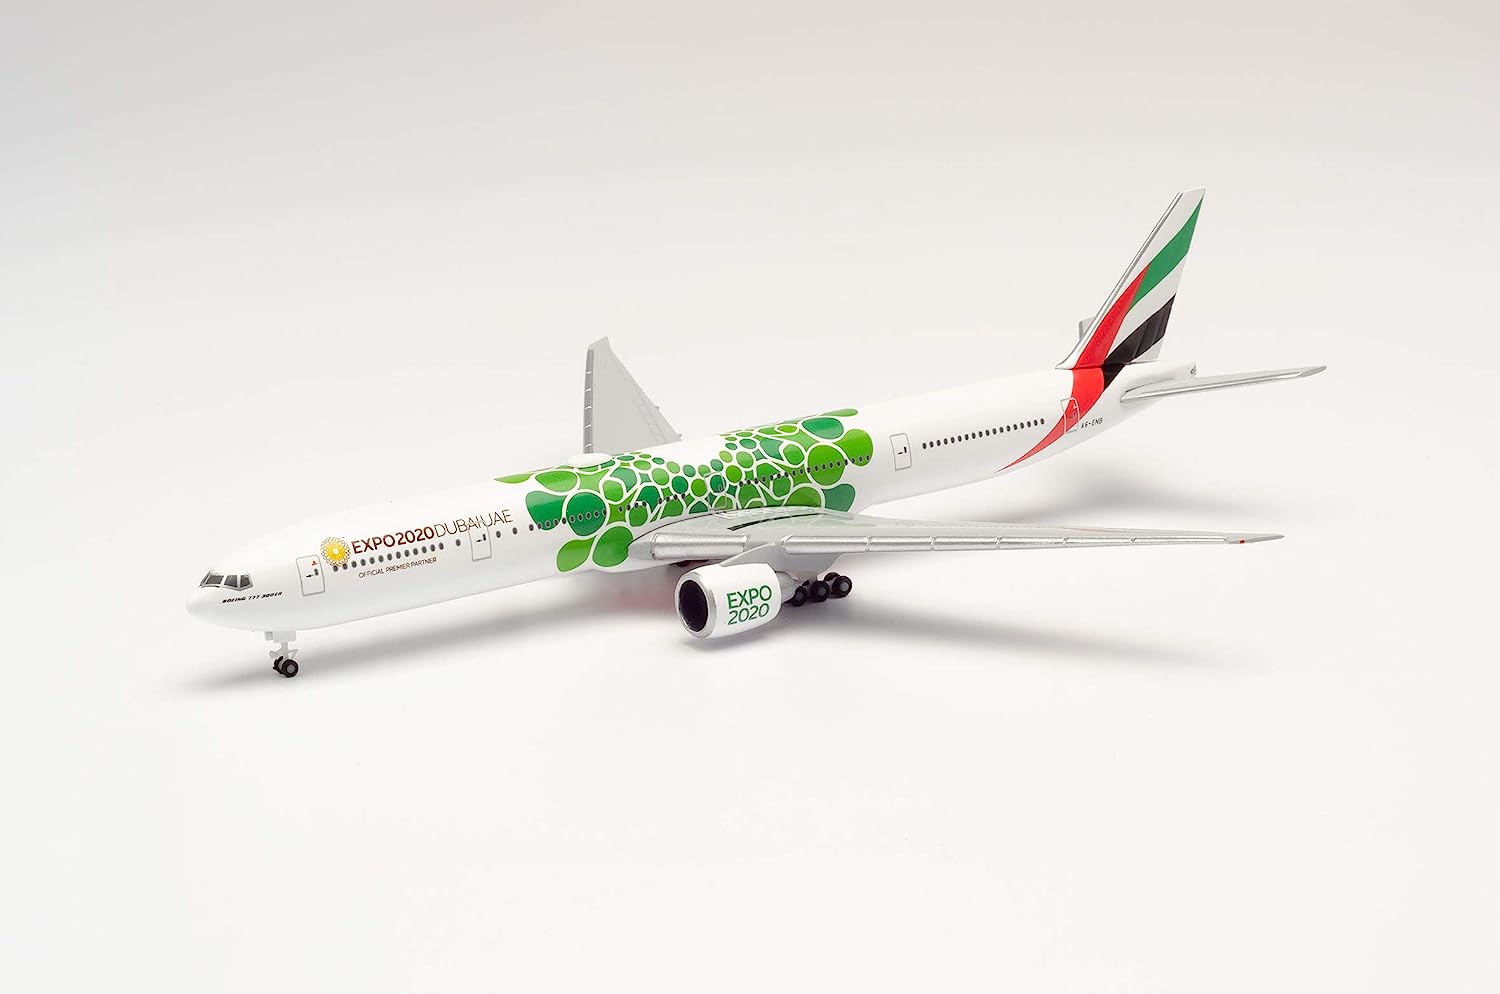   Emirates Boeing 777-300ER Expo 2020 Dubai, 1:500, 533720. # 2 hobbyplus.ru